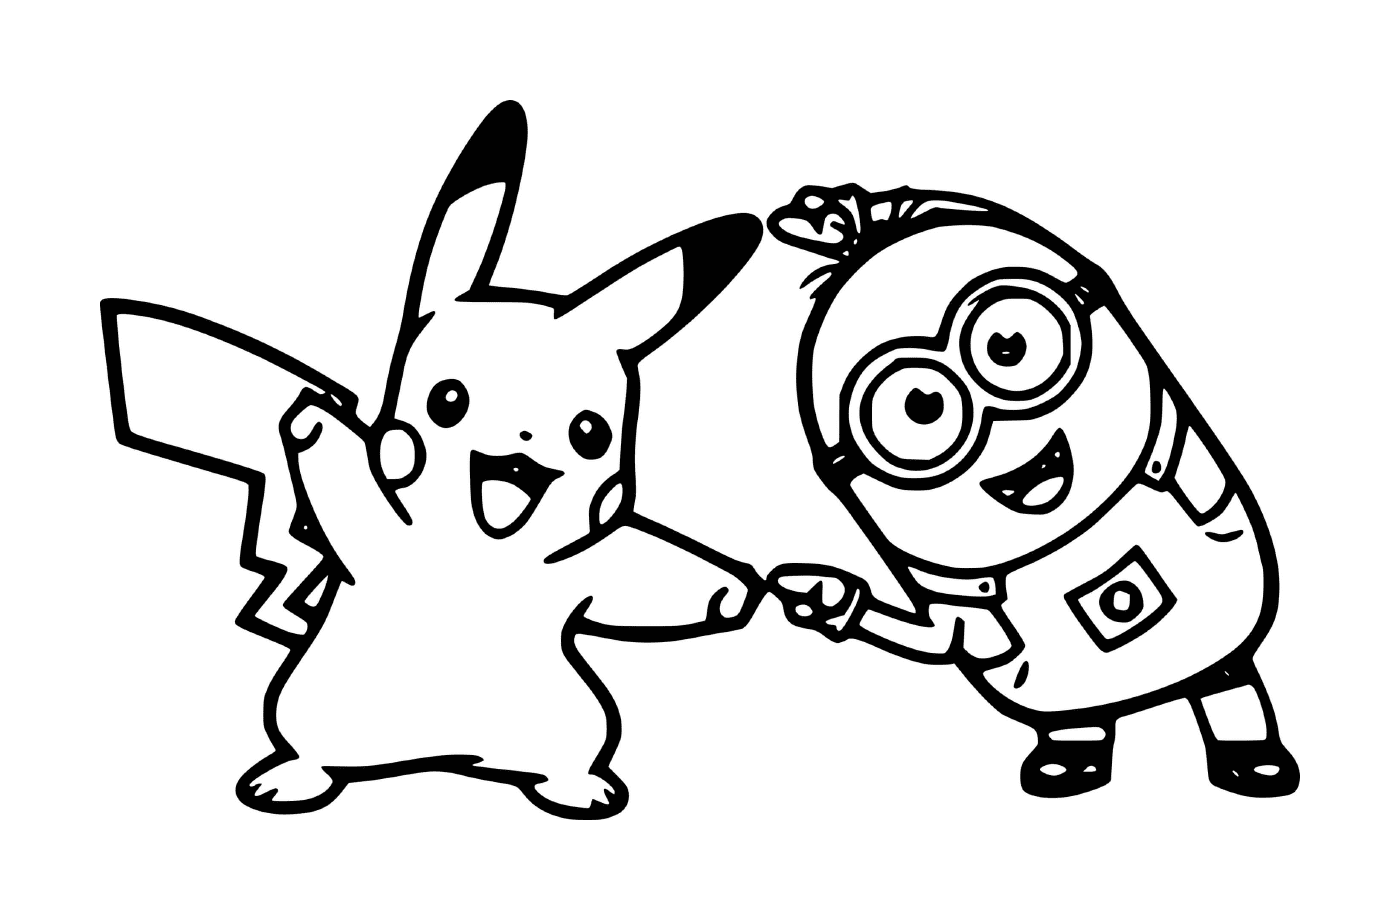  Minion and Pikachu together 